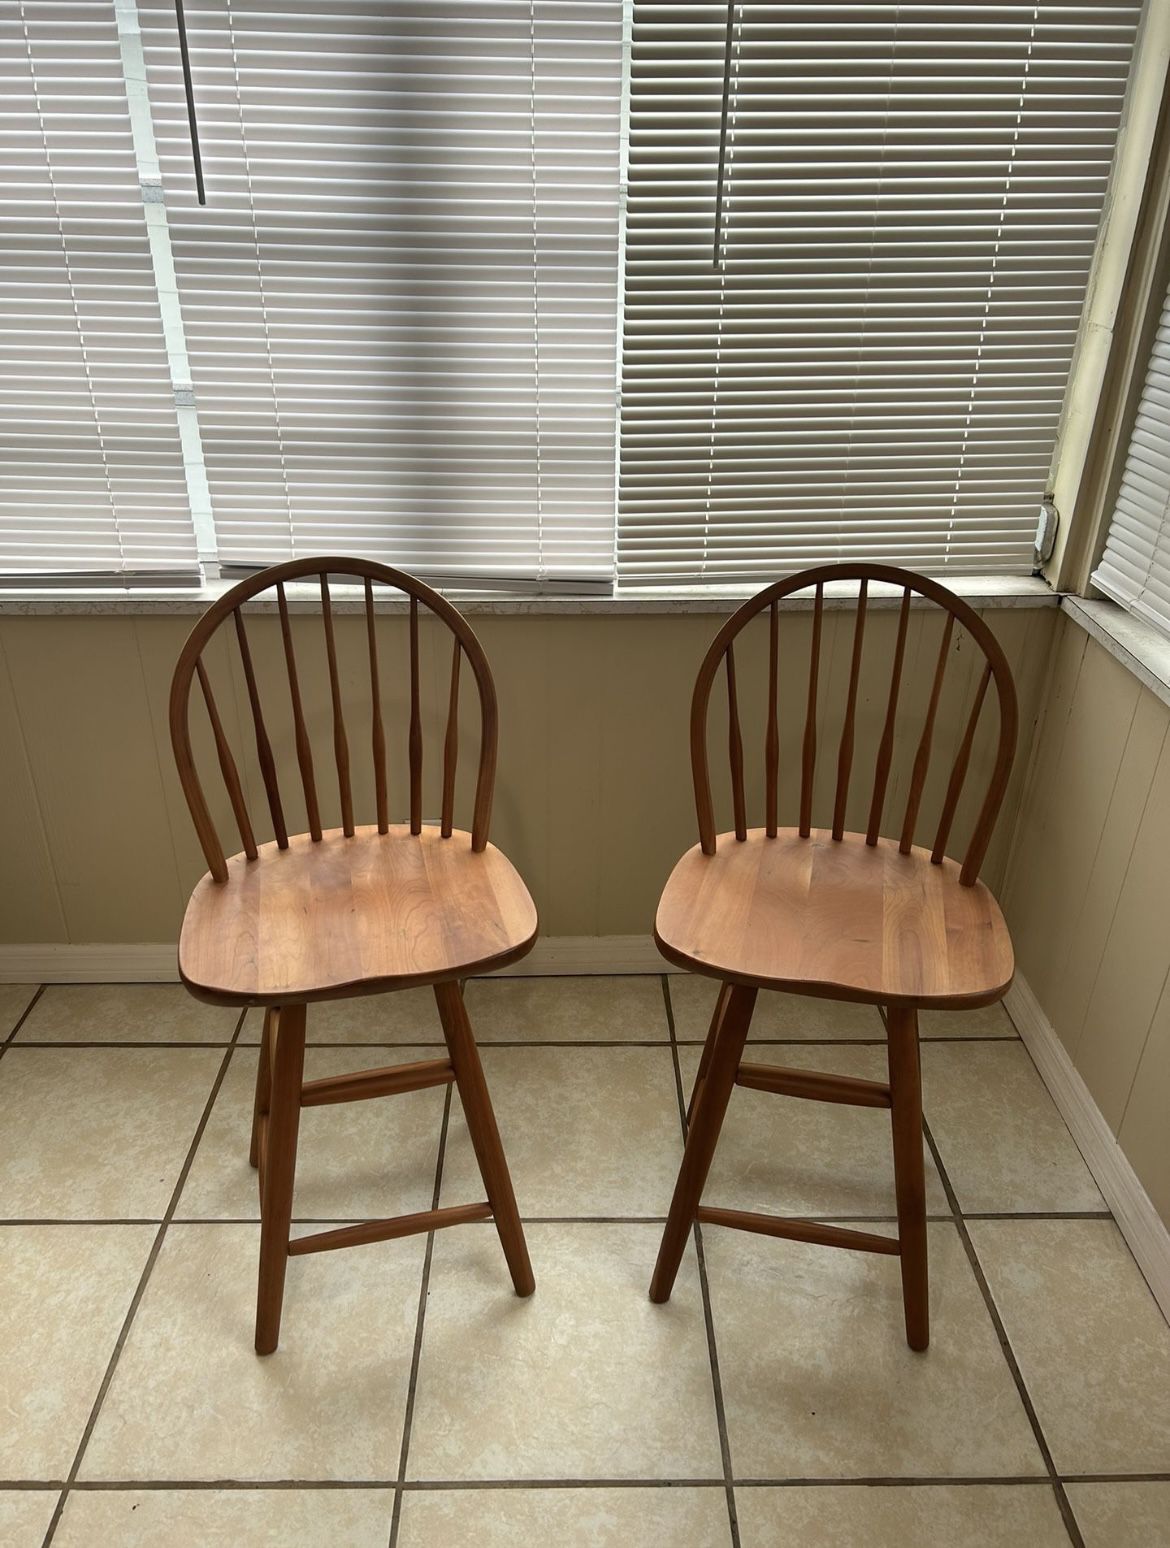 Set Of 2 Solid Wood Swivel Bar Chair